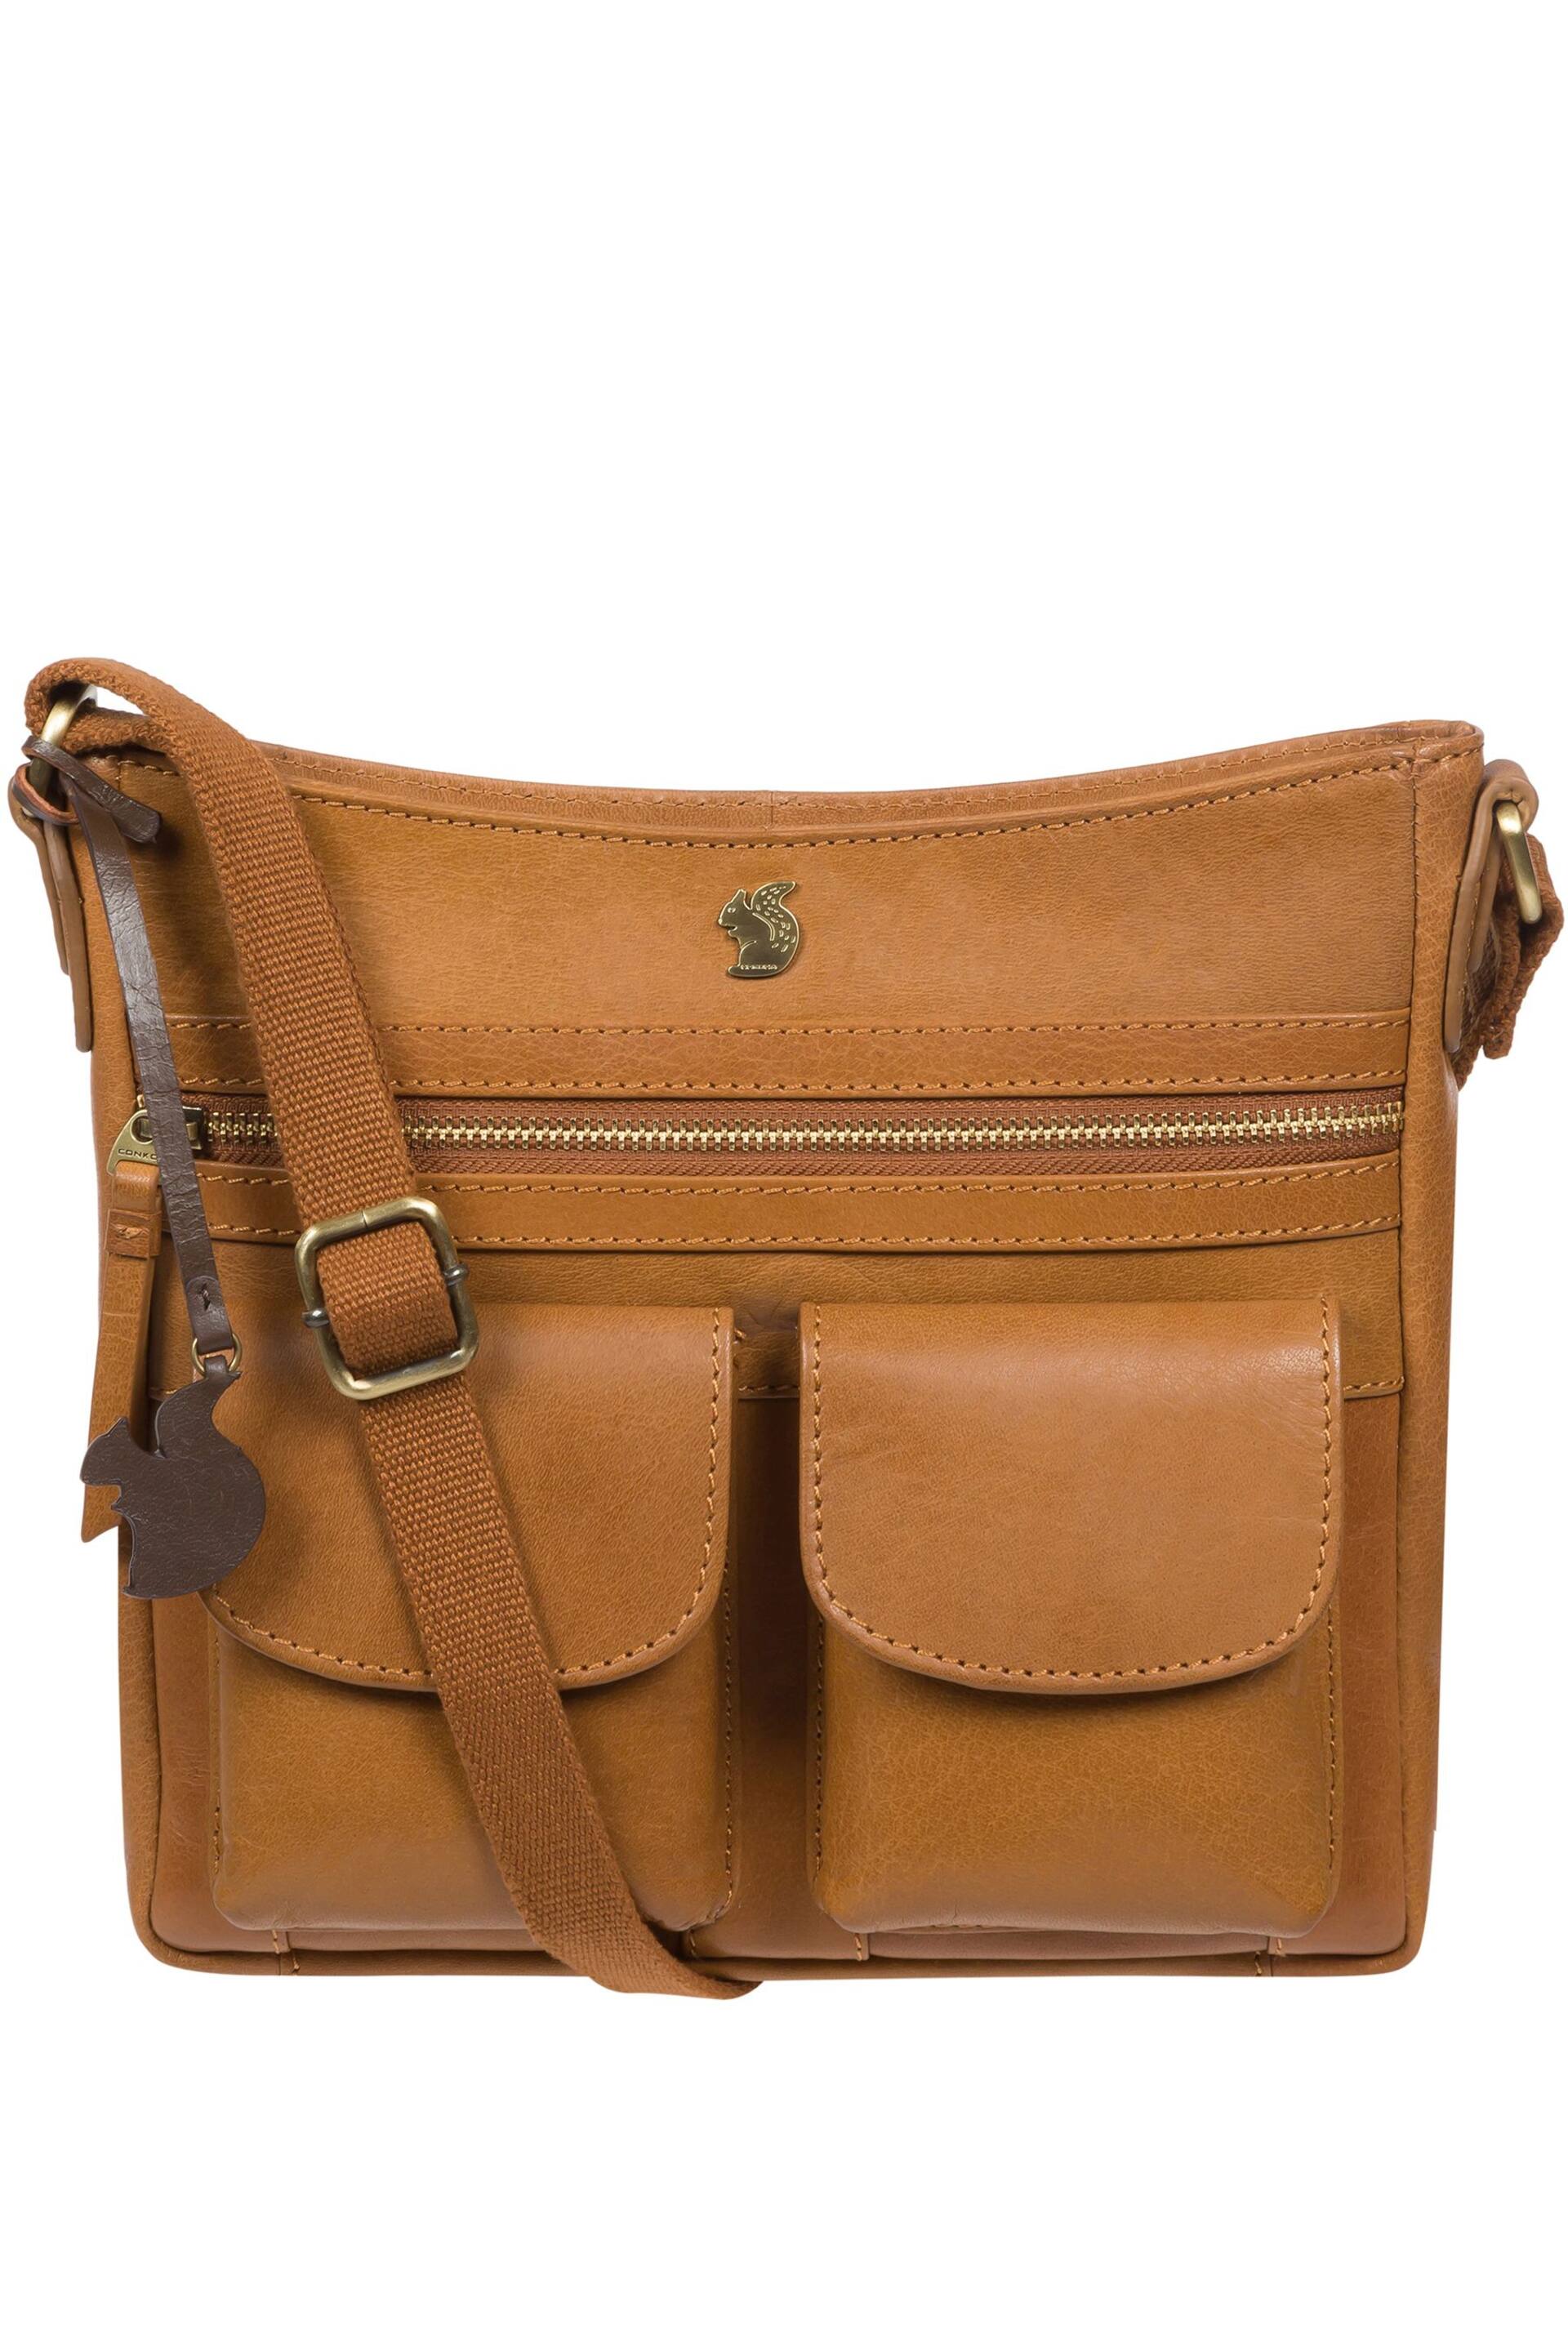 Conkca Baby Bon Leather Cross-Body Bag - Image 1 of 6